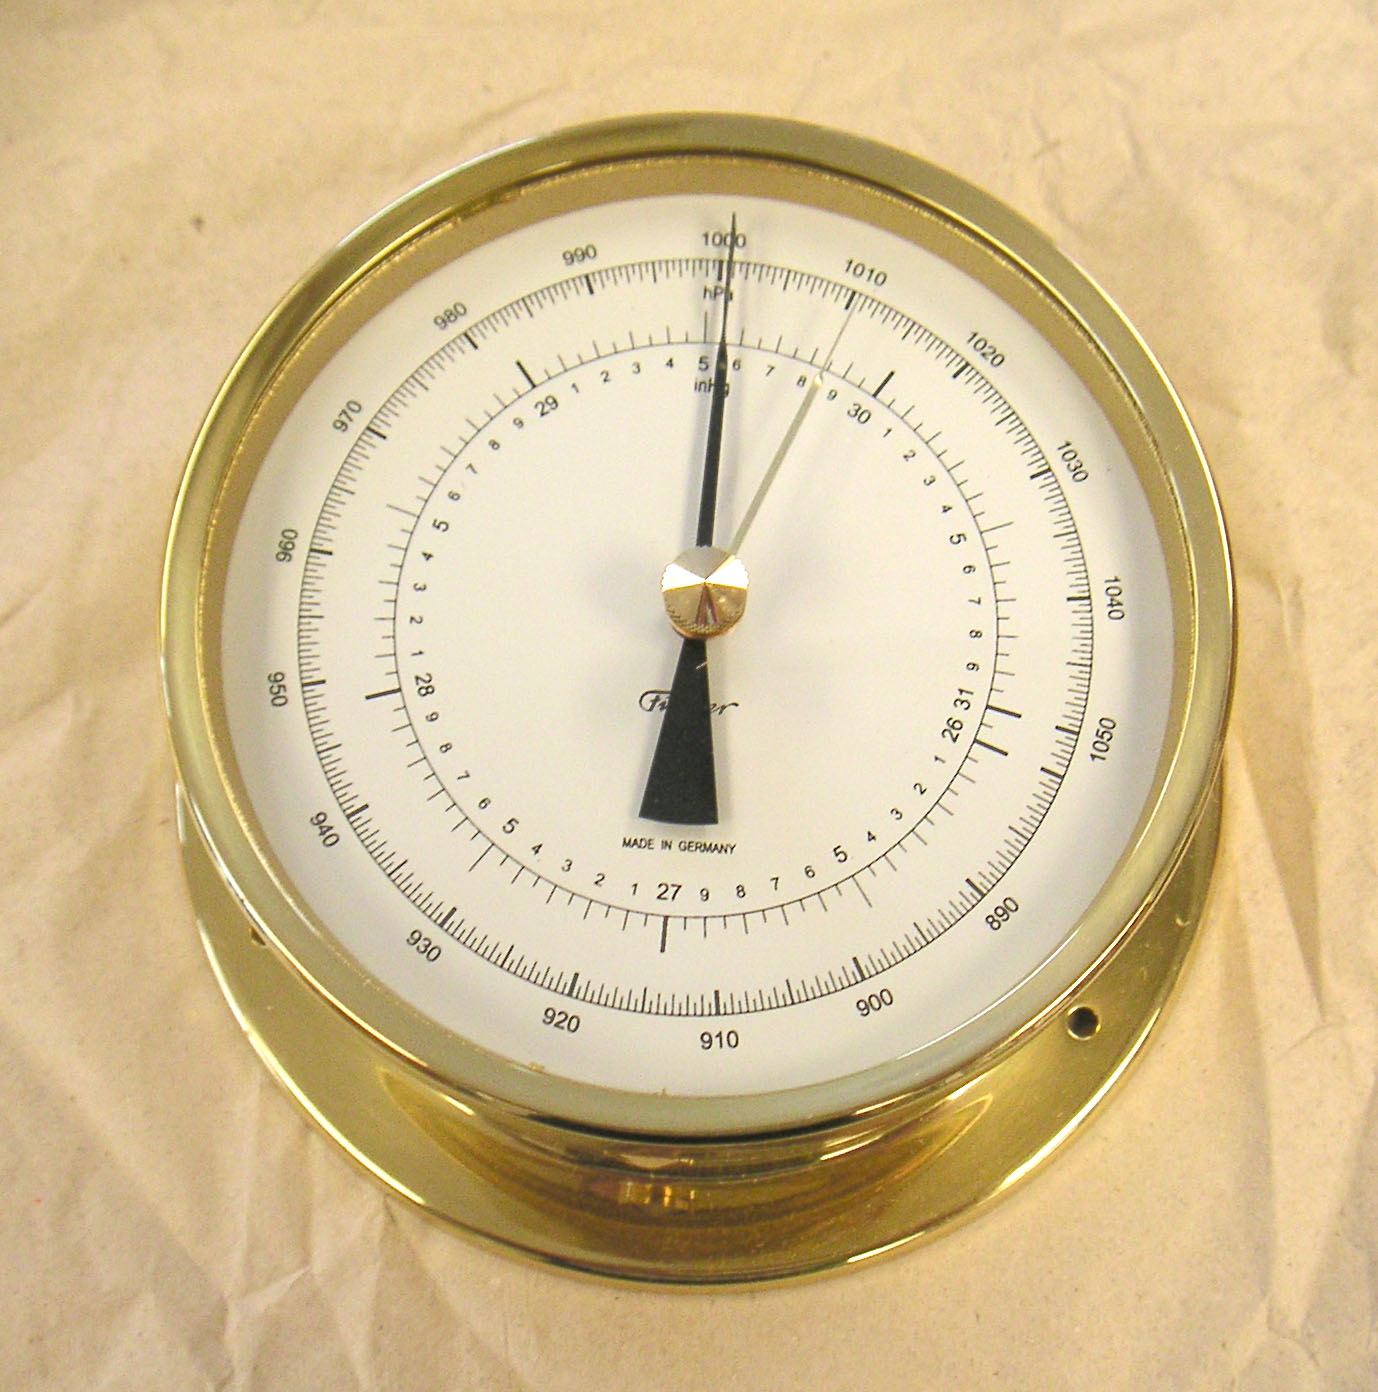 What Is A Barometer / Barometer - Wm. Widdop Dark Barometer, Barometer - priisma : Pressure tendency can forecast short term changes in the weather.